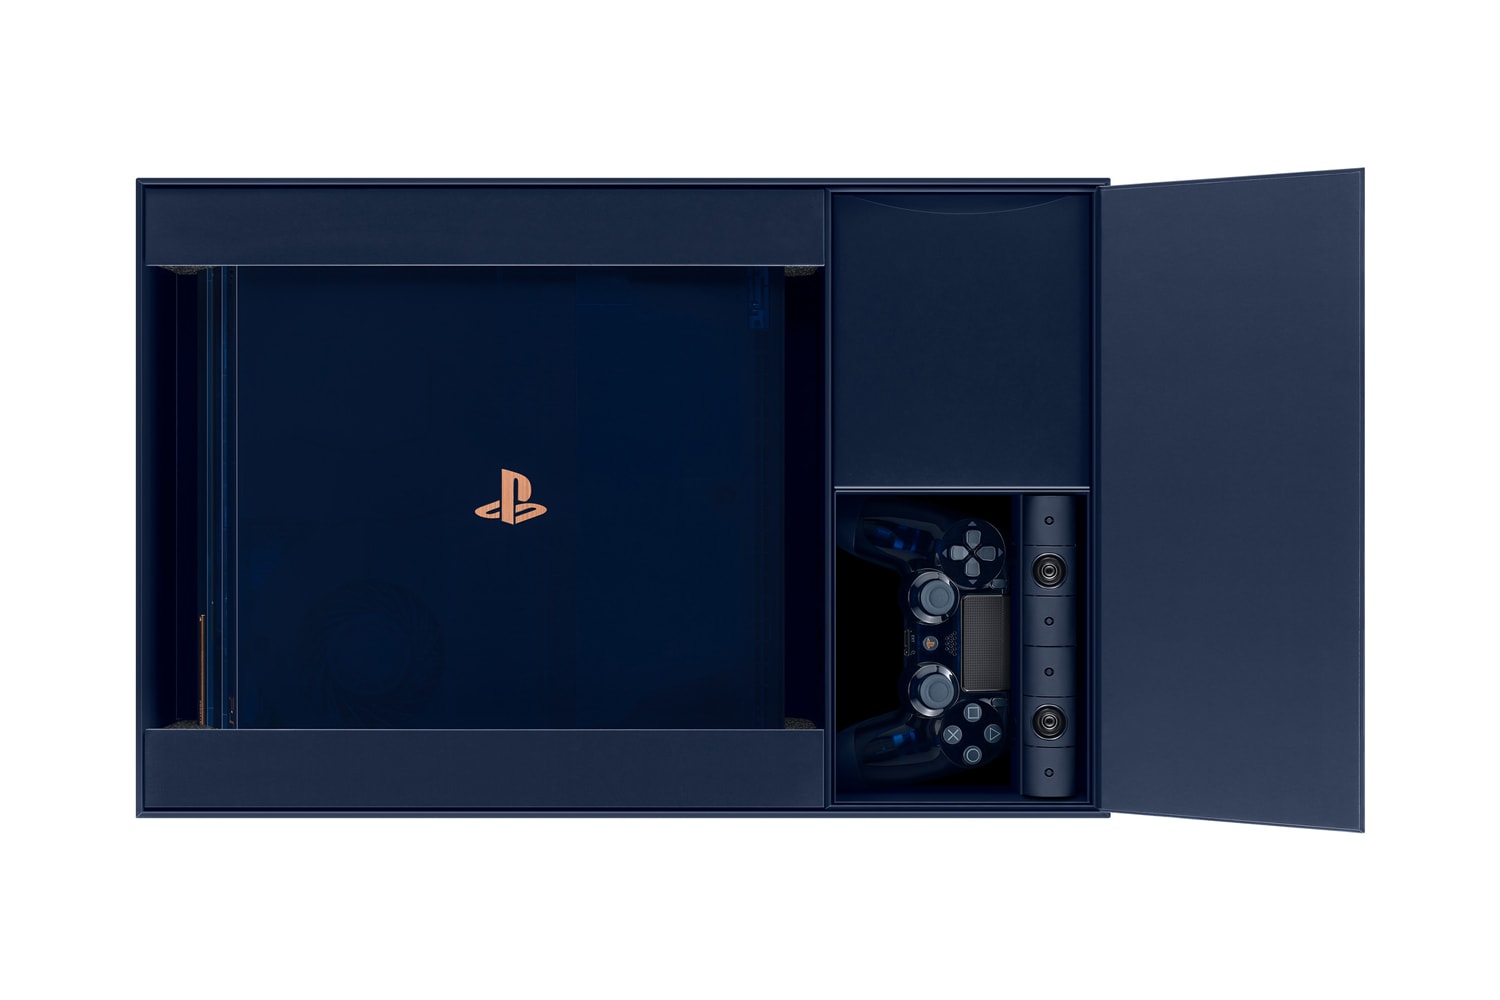 Sony 為慶祝 PlayStation 熱銷 5 億台推出全新限量版 PS4 Pro